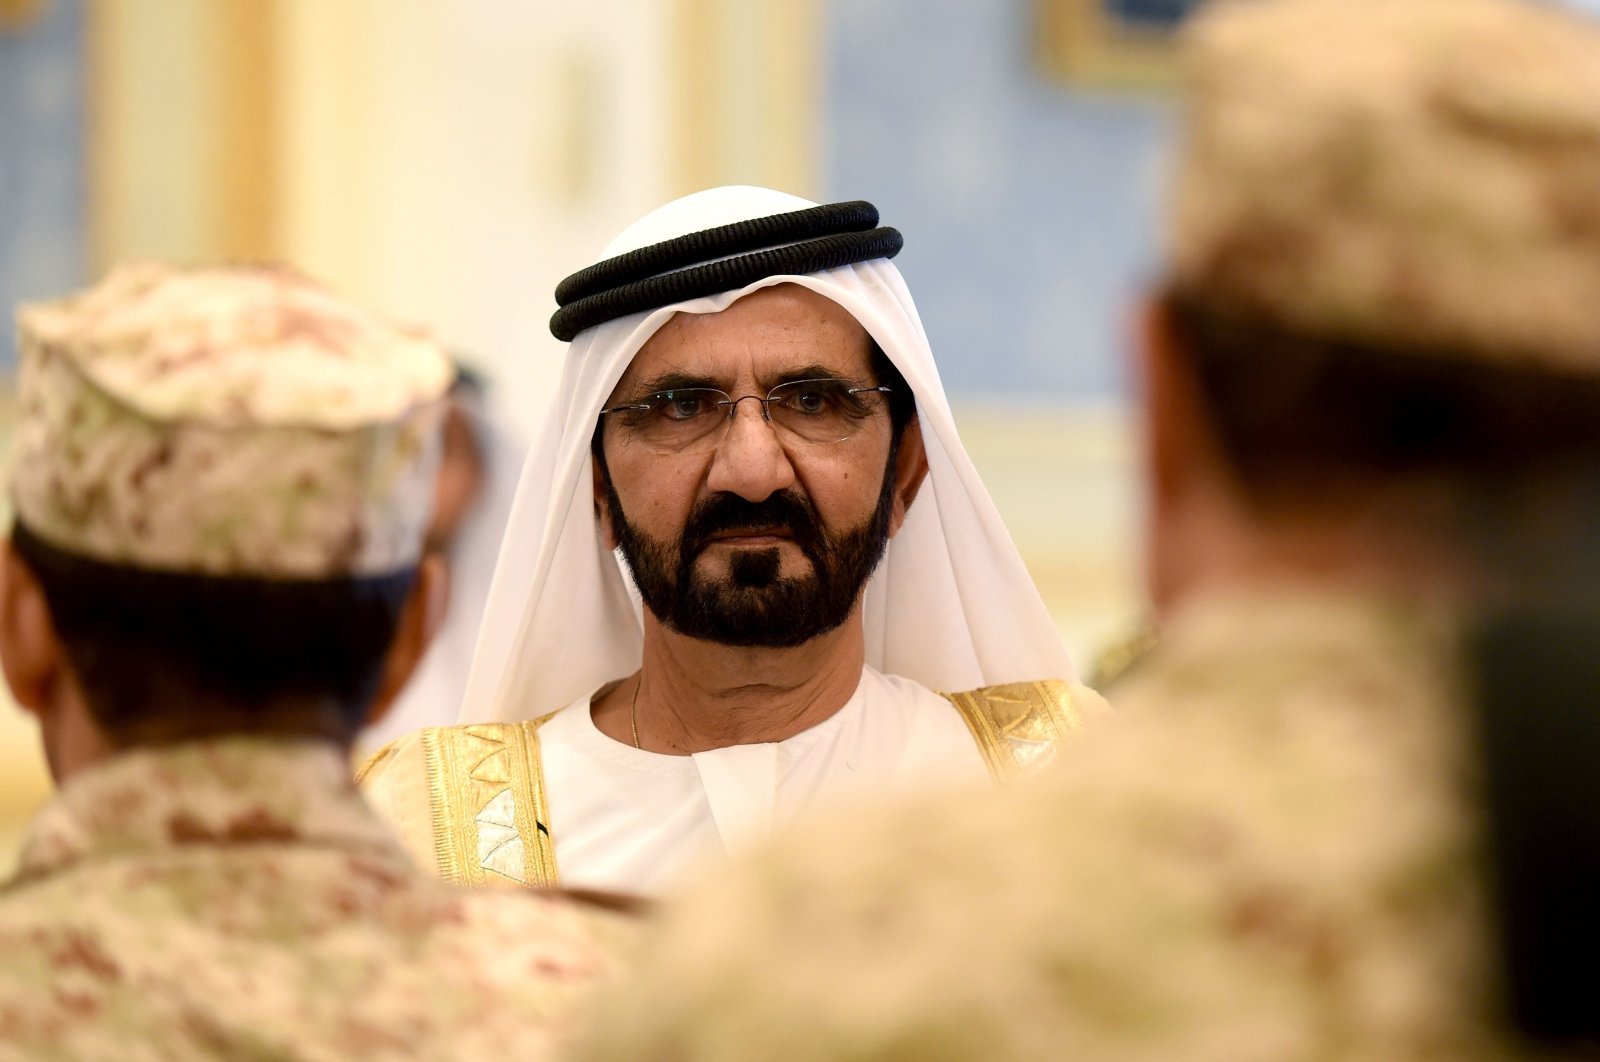 Prime Minister of the United Arab Emirates (UAE) and ruler of Dubai, Sheikh Mohammed bin Rashid Al Maktoum, arrives for a Gulf Cooperation Council (GCC) summit in Riyadh, Saudi Arabia, May 5, 2015. (AFP Photo)